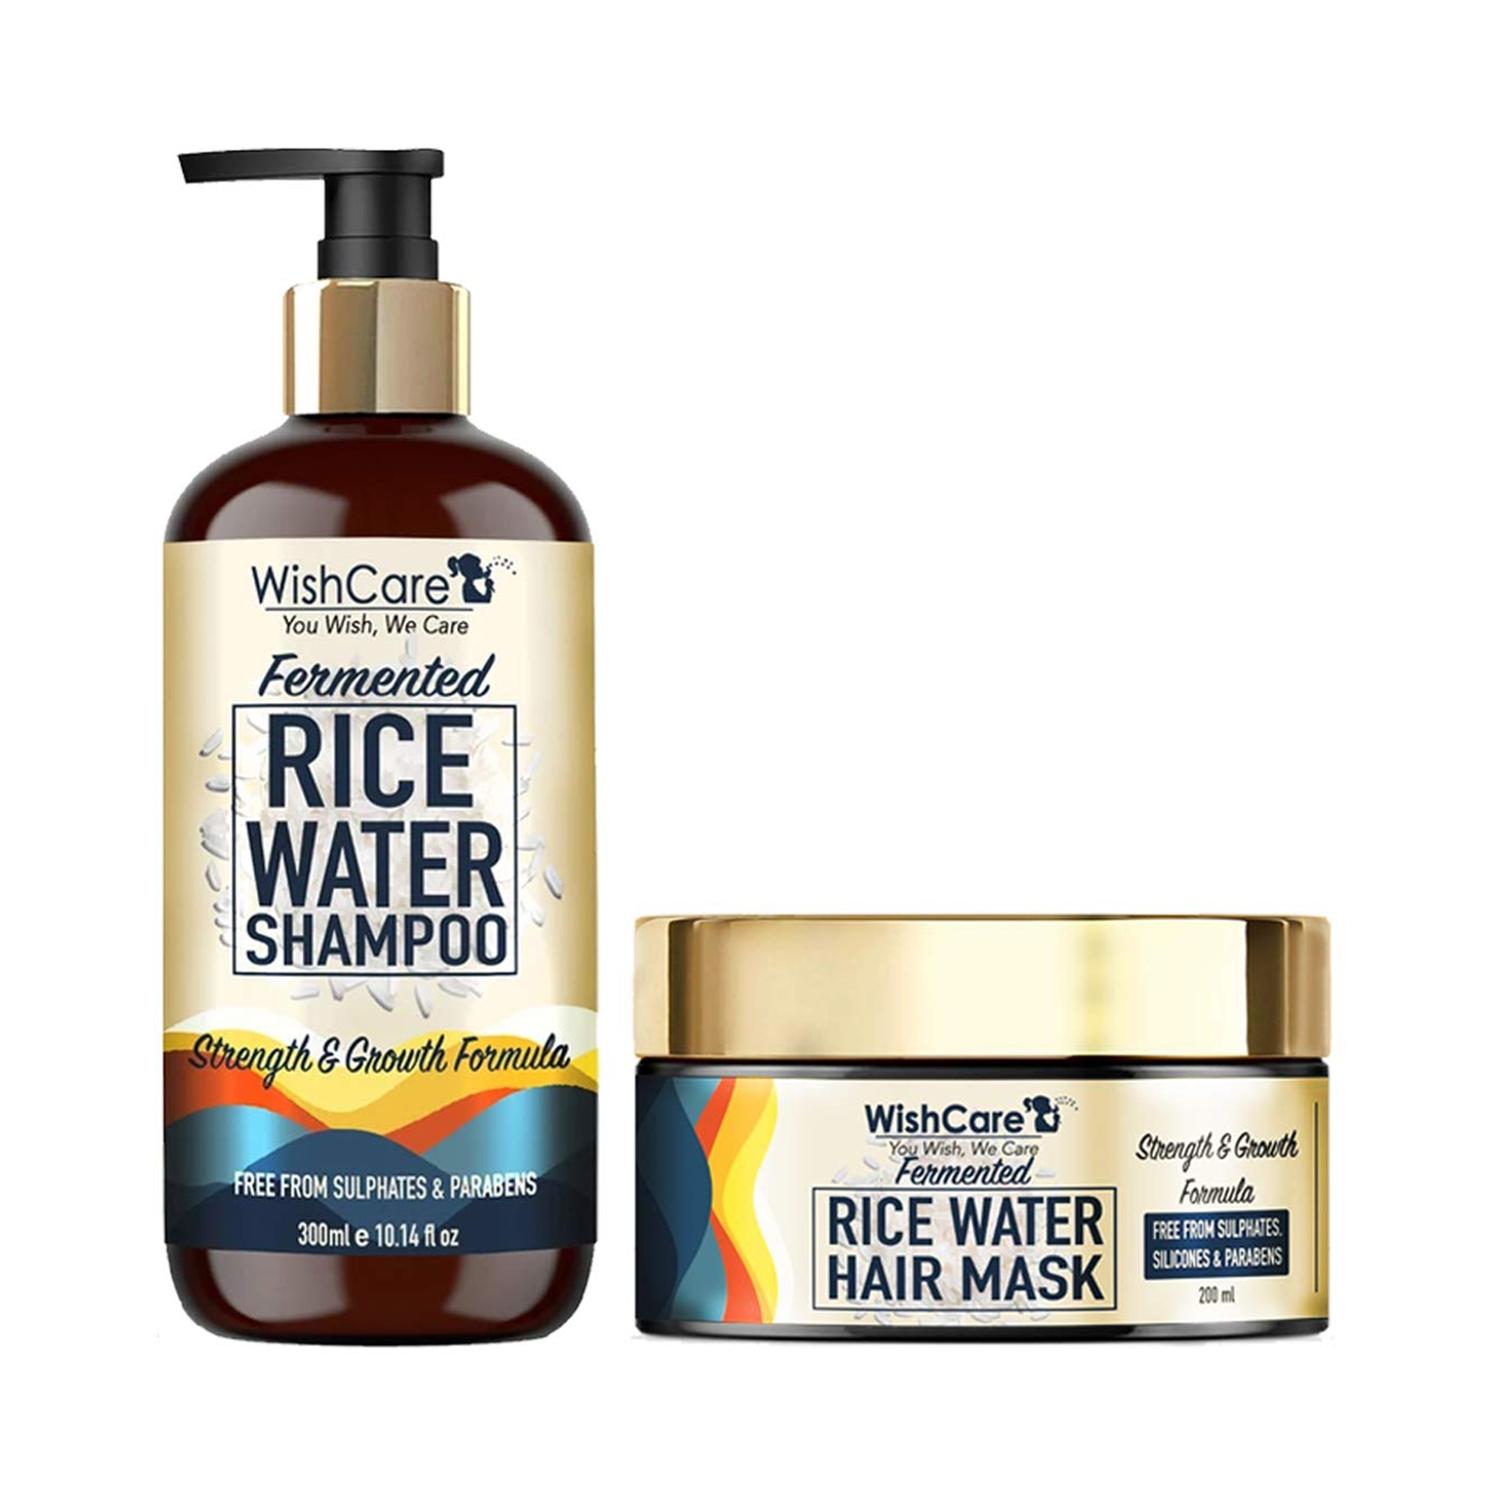 WishCare Strength & Growth Formula Fermented Rice Water Shampoo & Hair Mask Combo